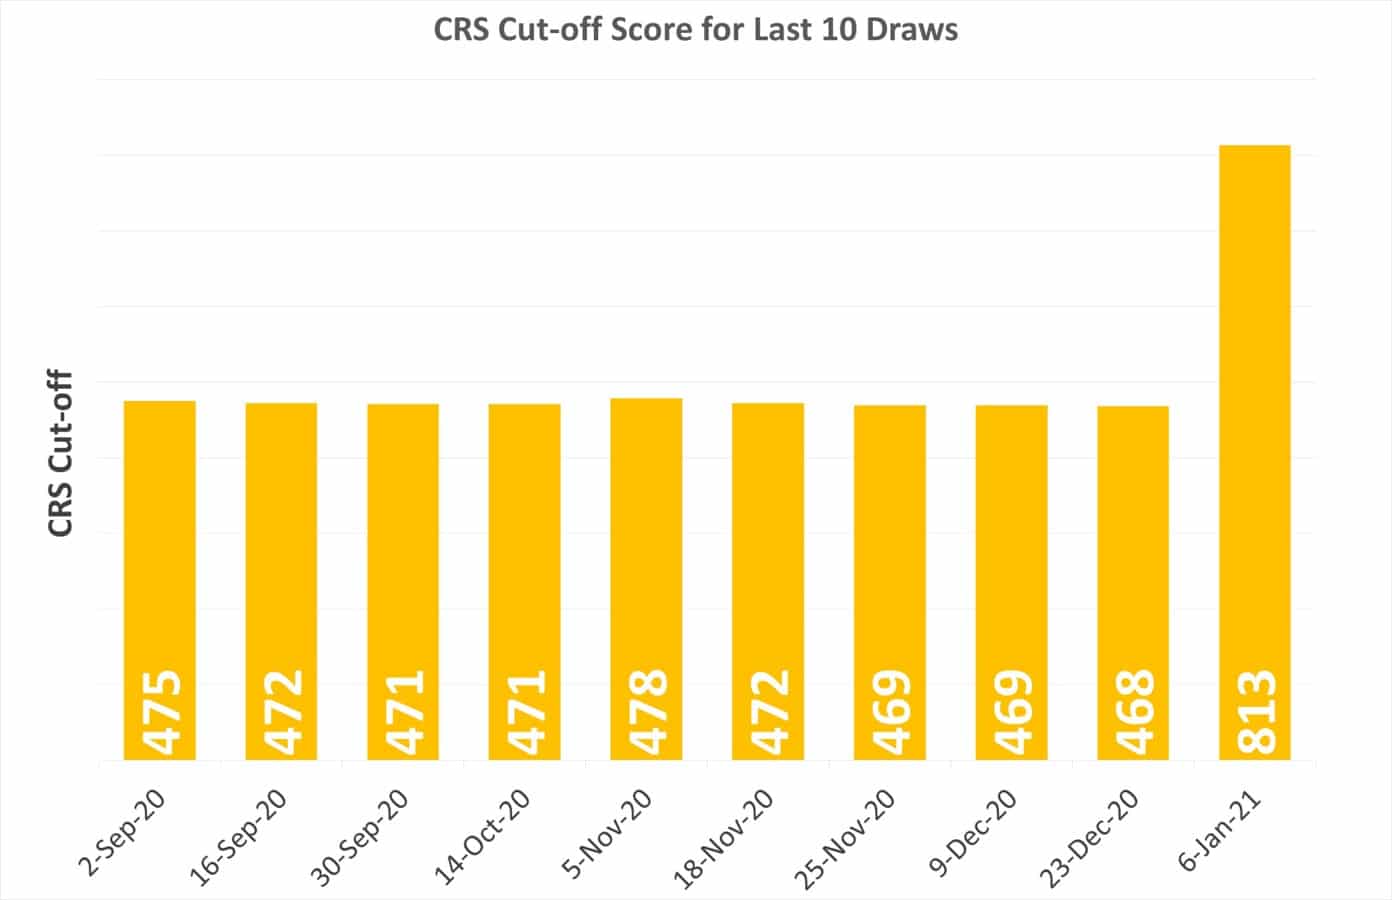 CRS Cutoff Score for last 10 draws